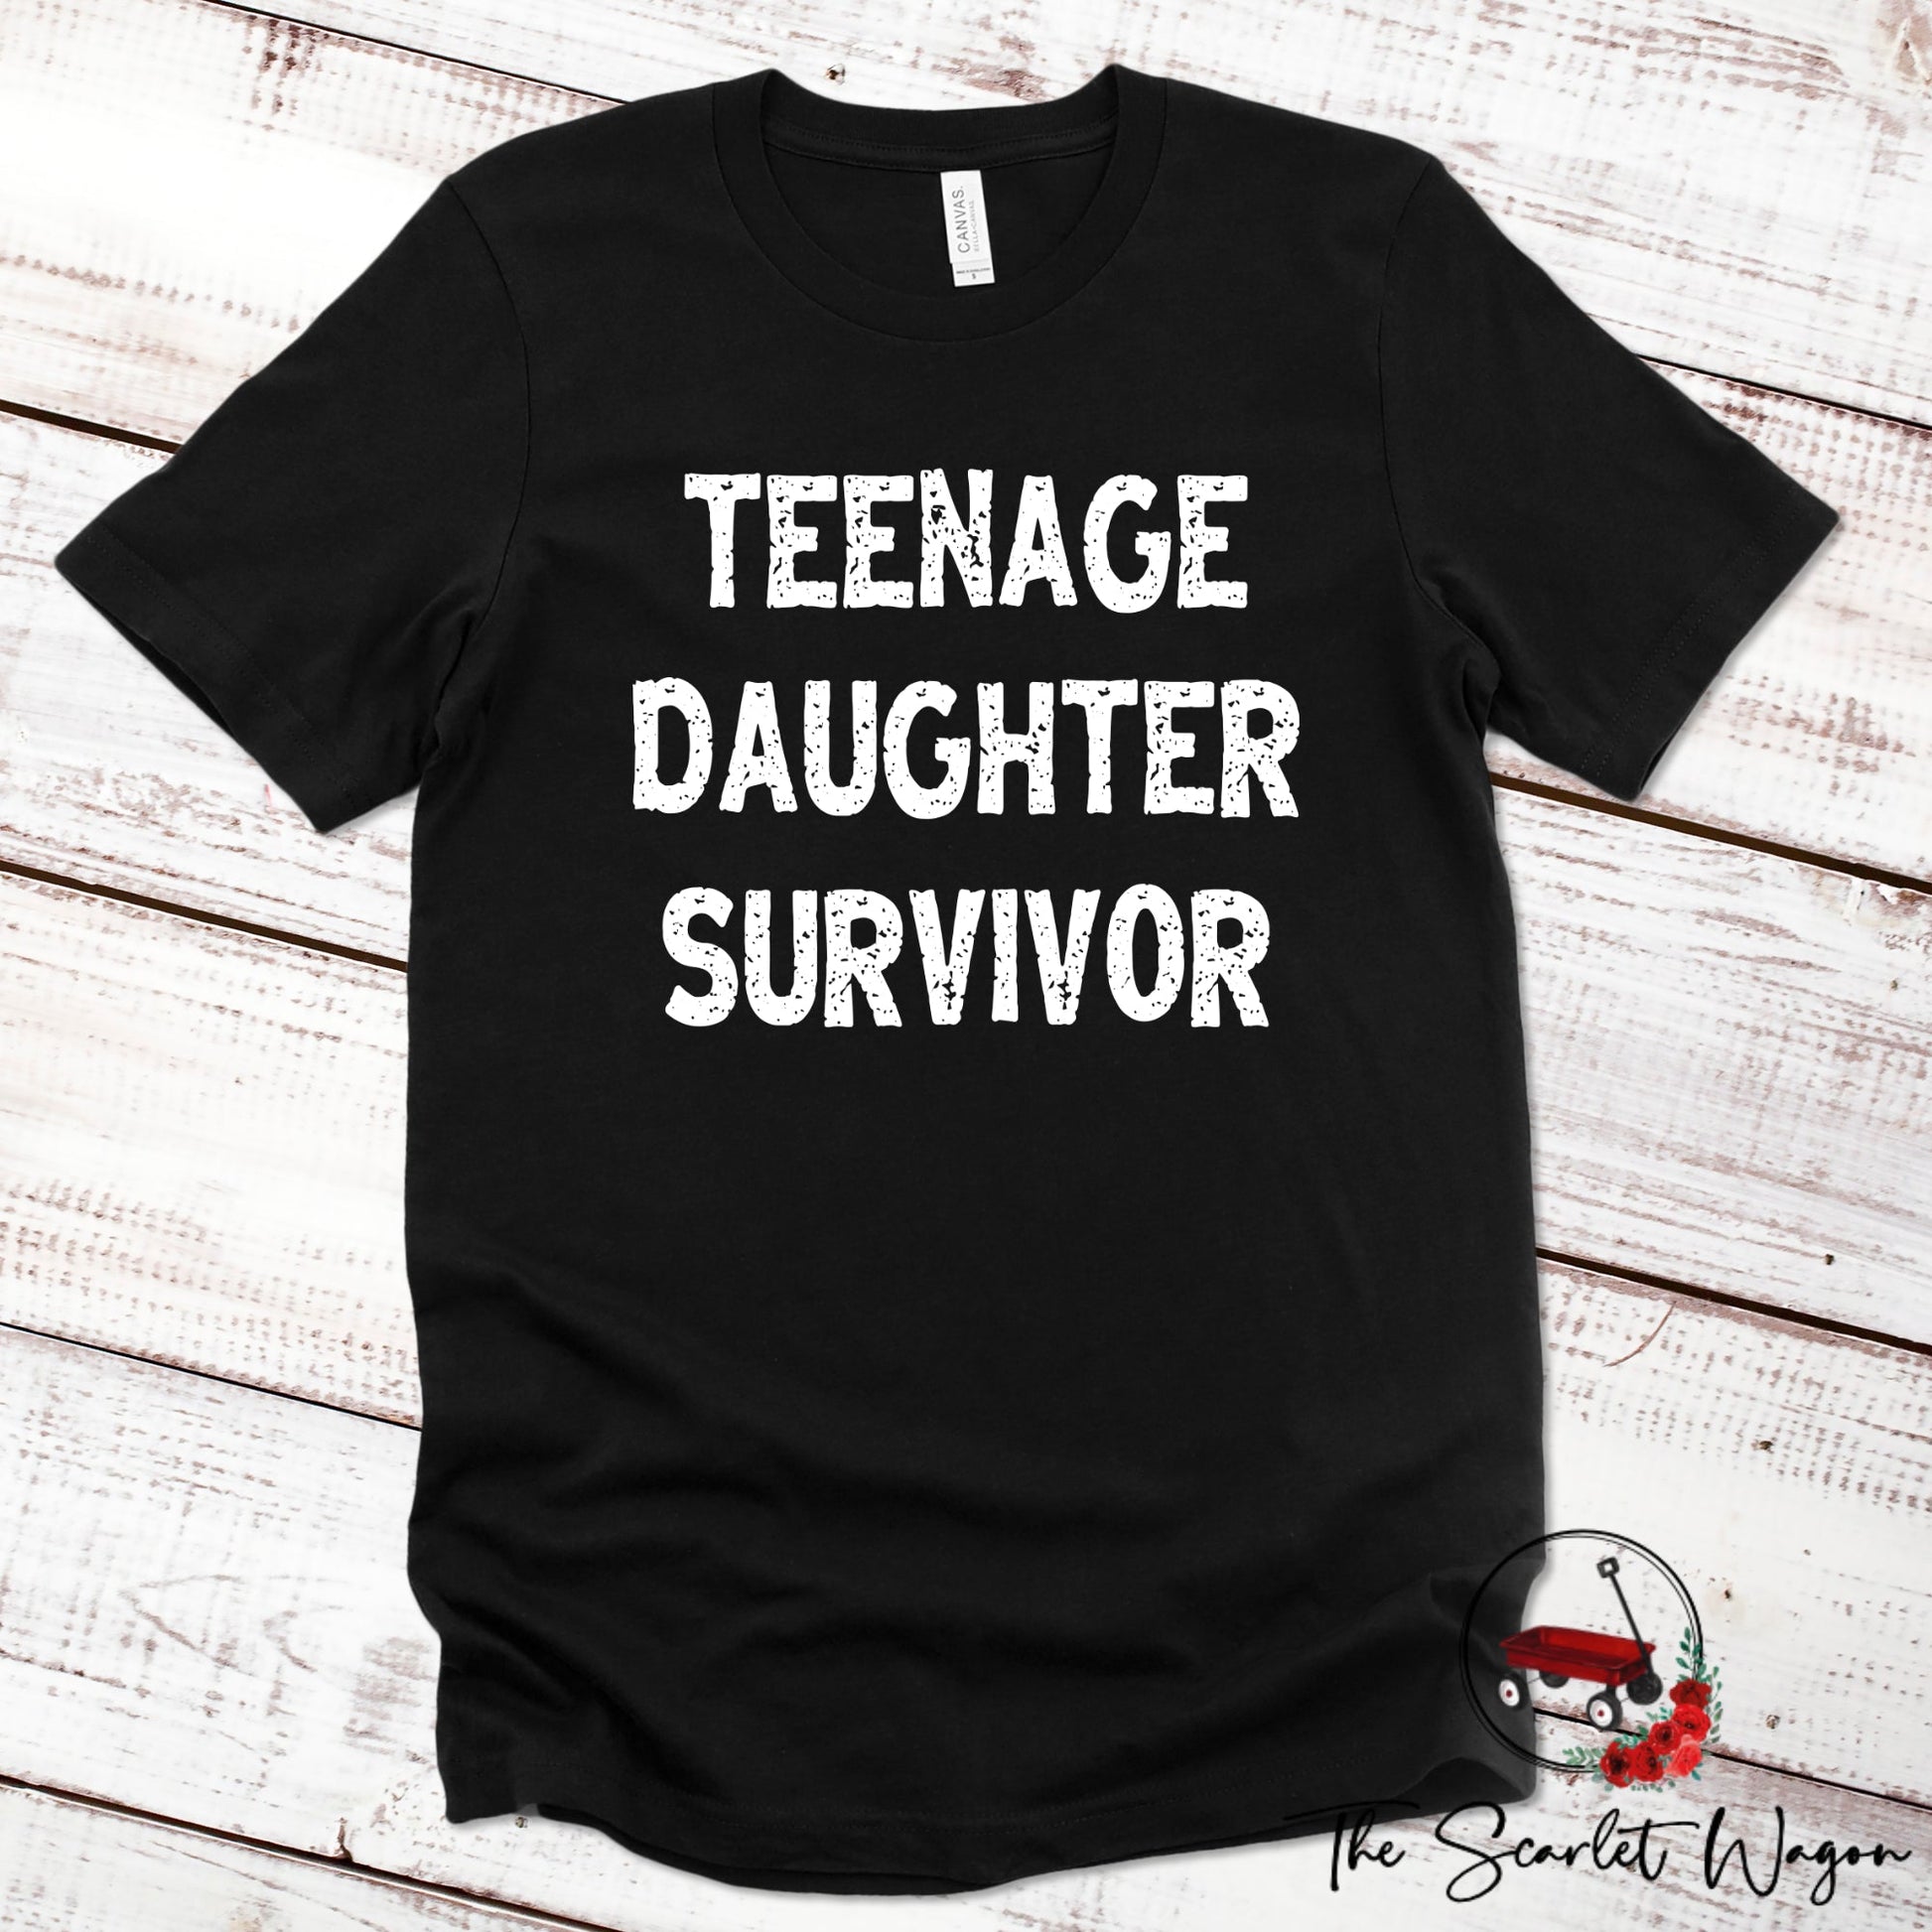 Teenage Daughter Survivor Premium Tee Scarlet Wagon Black XS 